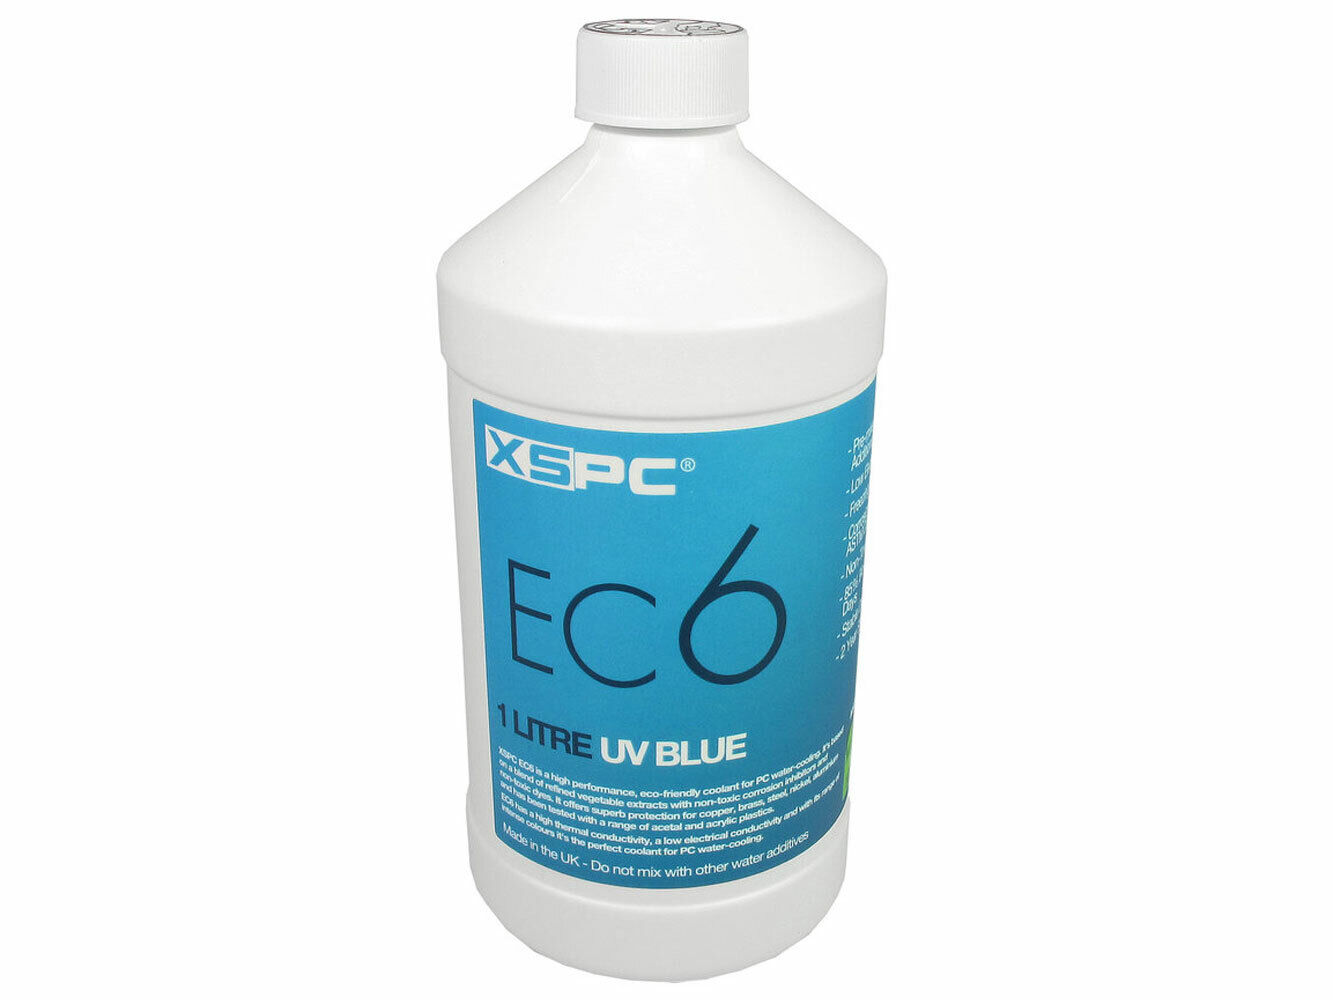 XSPC EC6 High Performance Premix PC Coolant, Translucent, 1000 mL, UV Blue